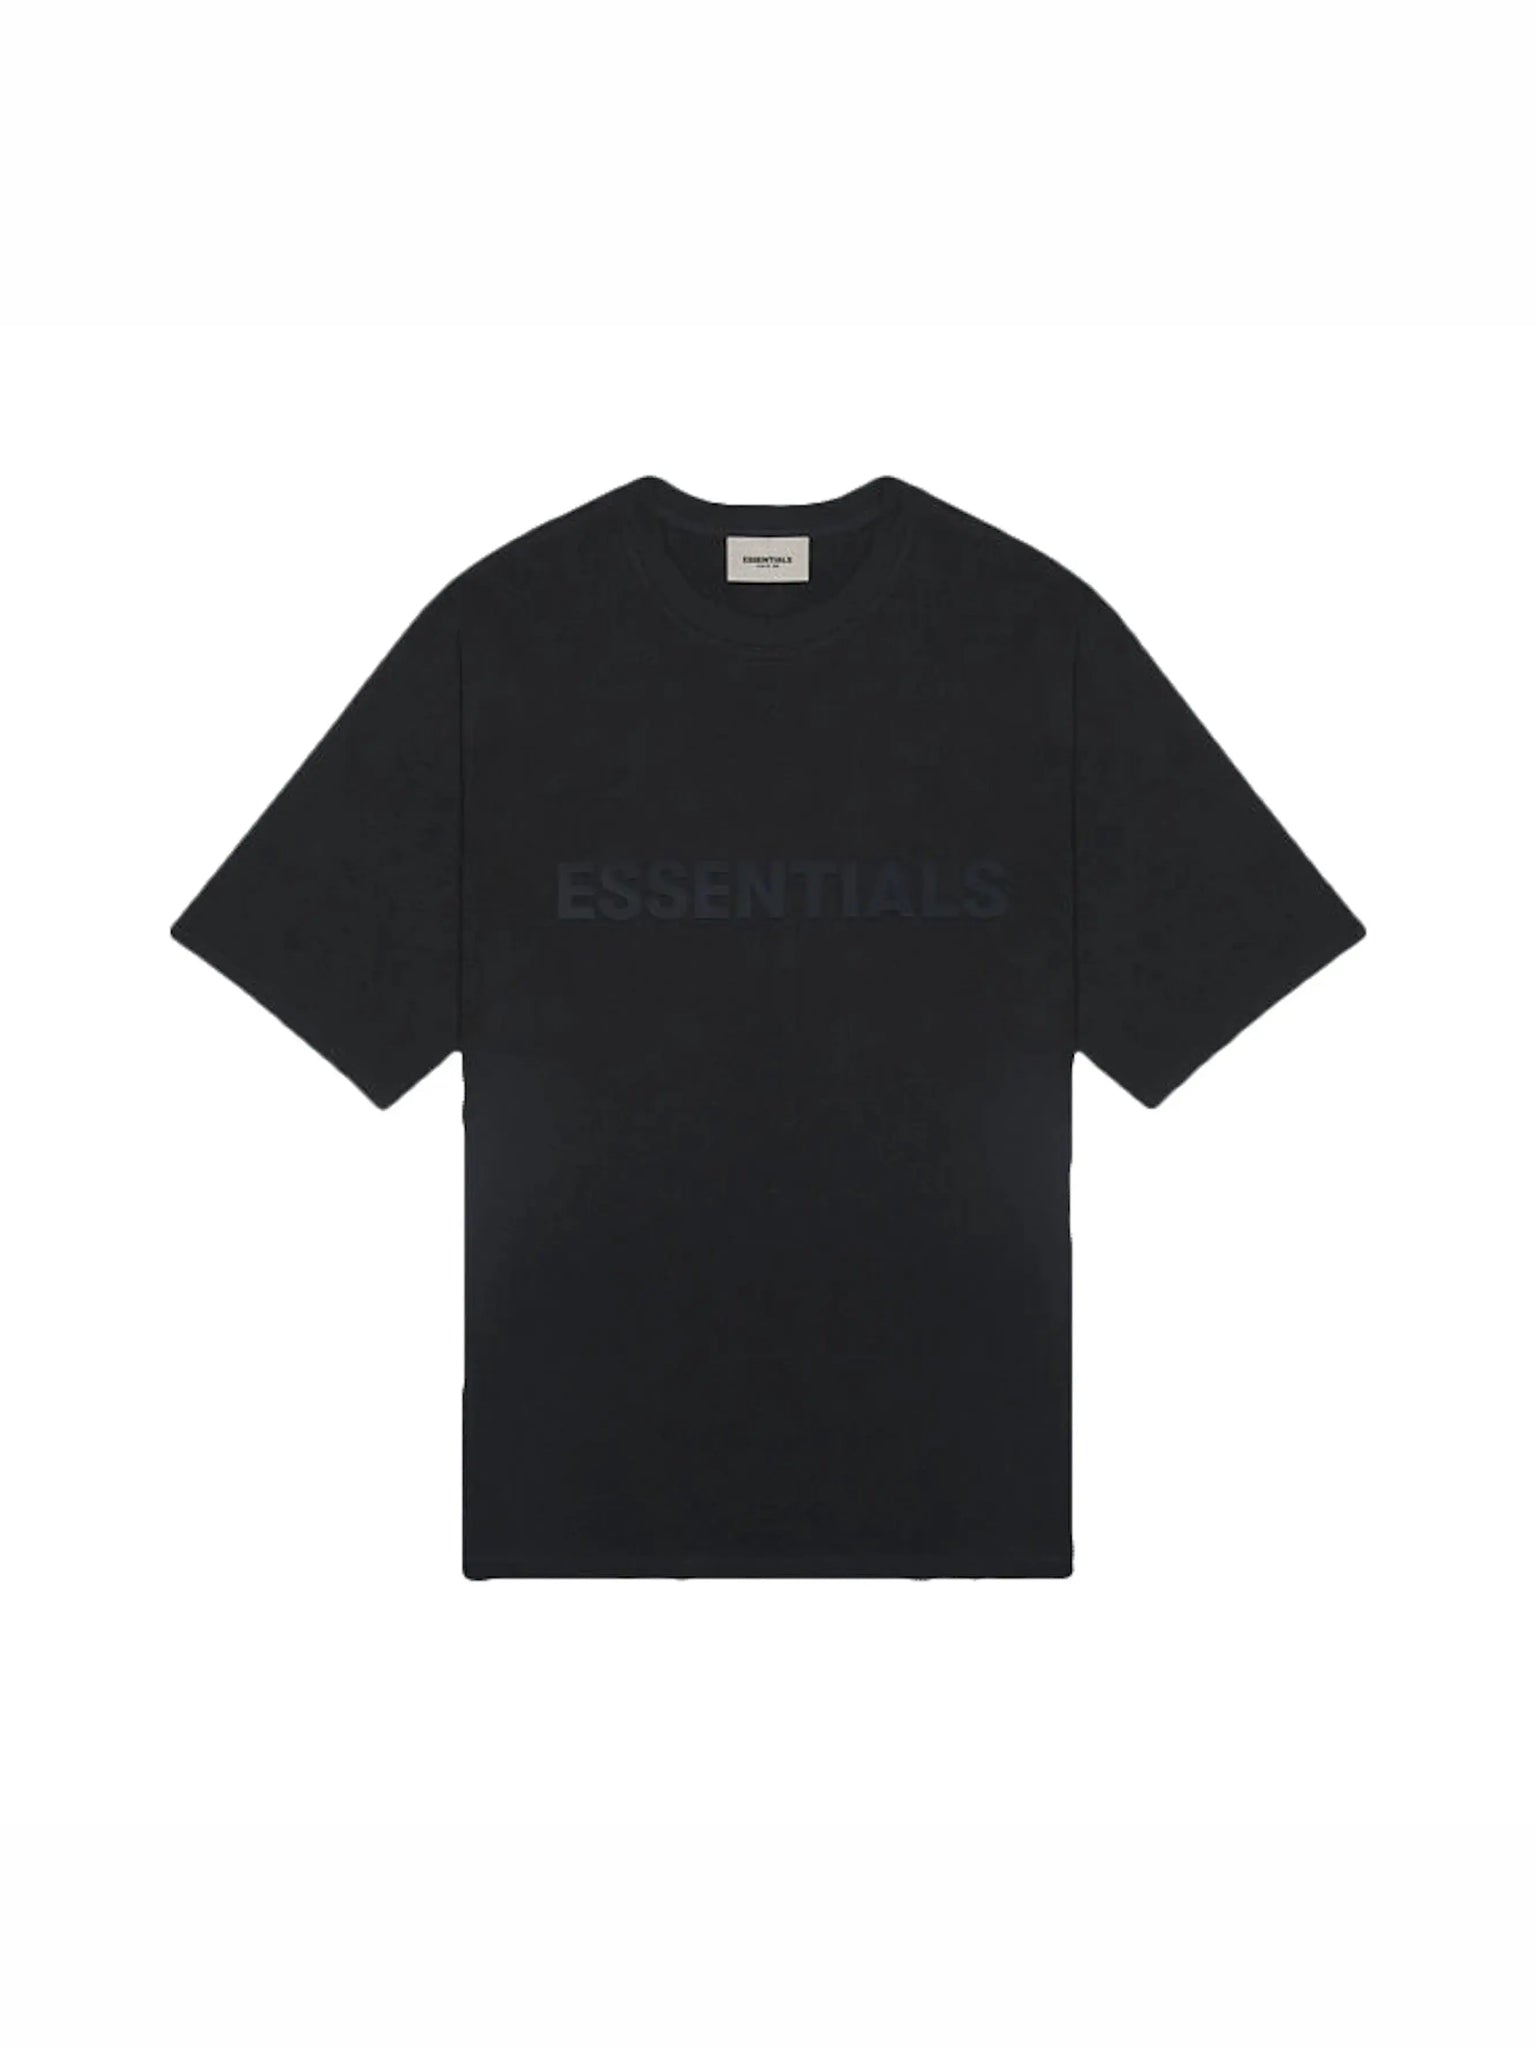 Fear of God Essentials Boxy T-Shirt Applique Logo Dark Slate/Stretch Limo/Black in Melbourne, Australia - Prior